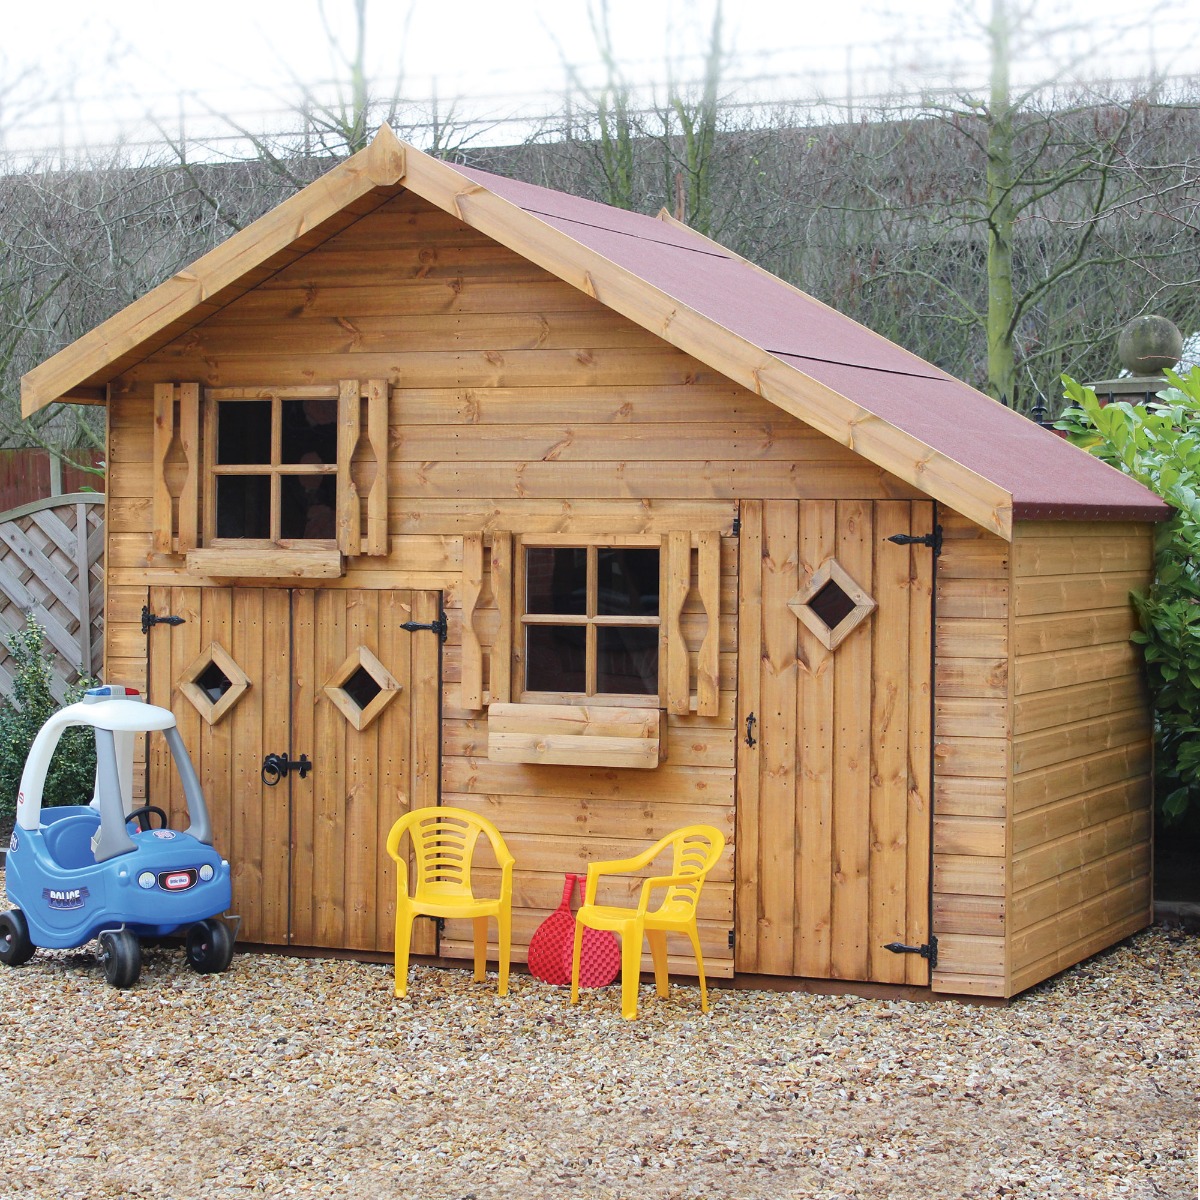 kids wooden playhouse